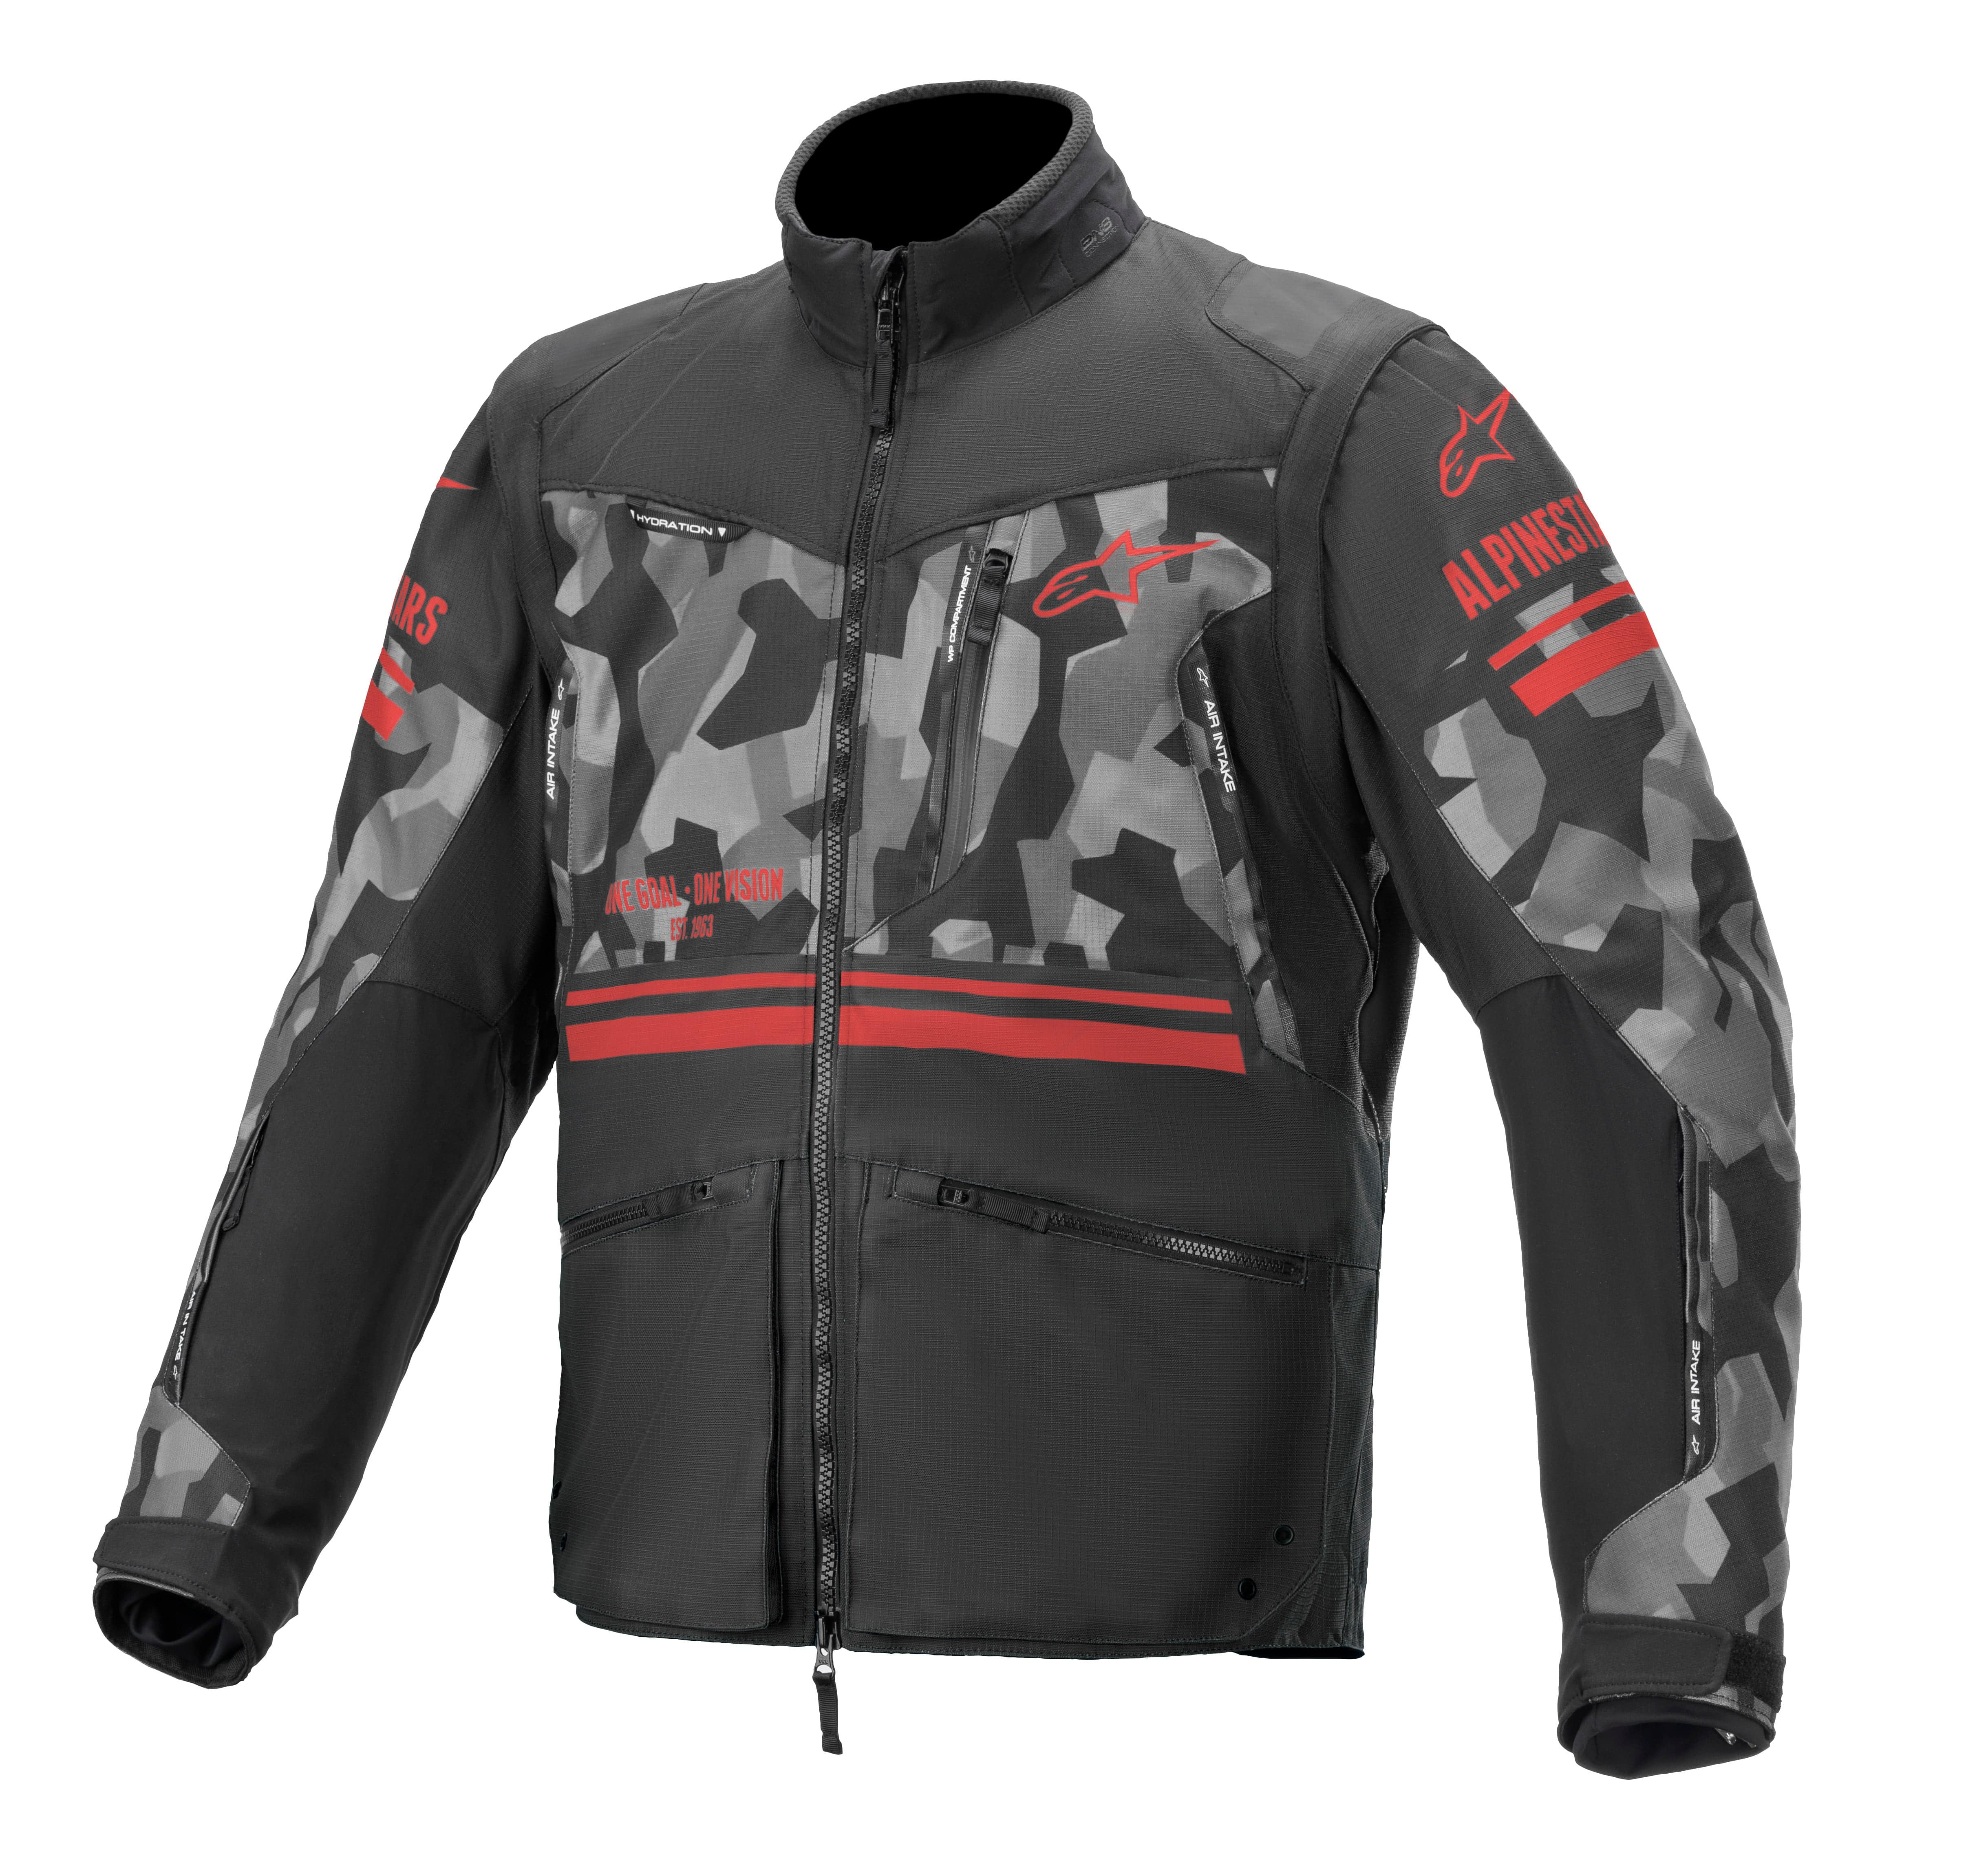 Western Powersports Jacket Grey Camo/Fluorescent Red / 2X Venture R Jacket By Alpinestars 3703019-9133-2XL